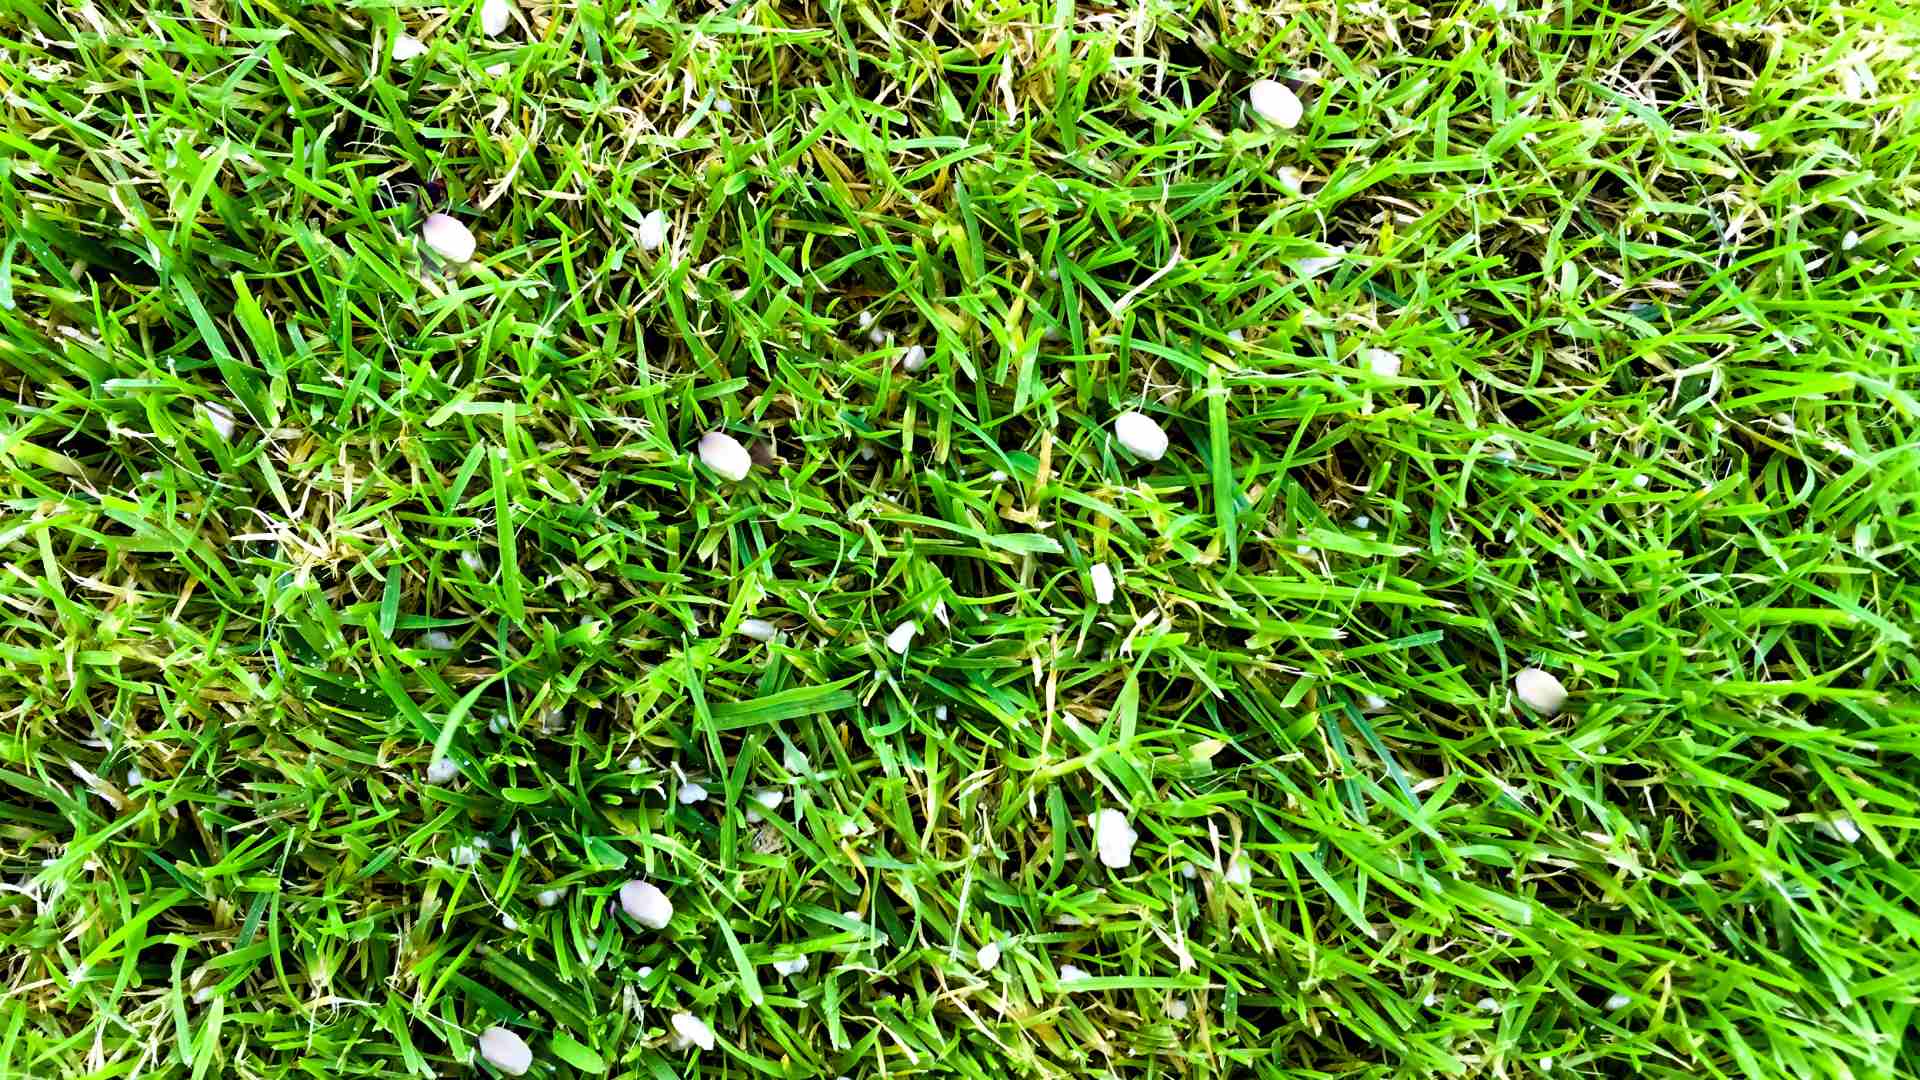 Granular fertilizer spread among lawn in Austin, TX.